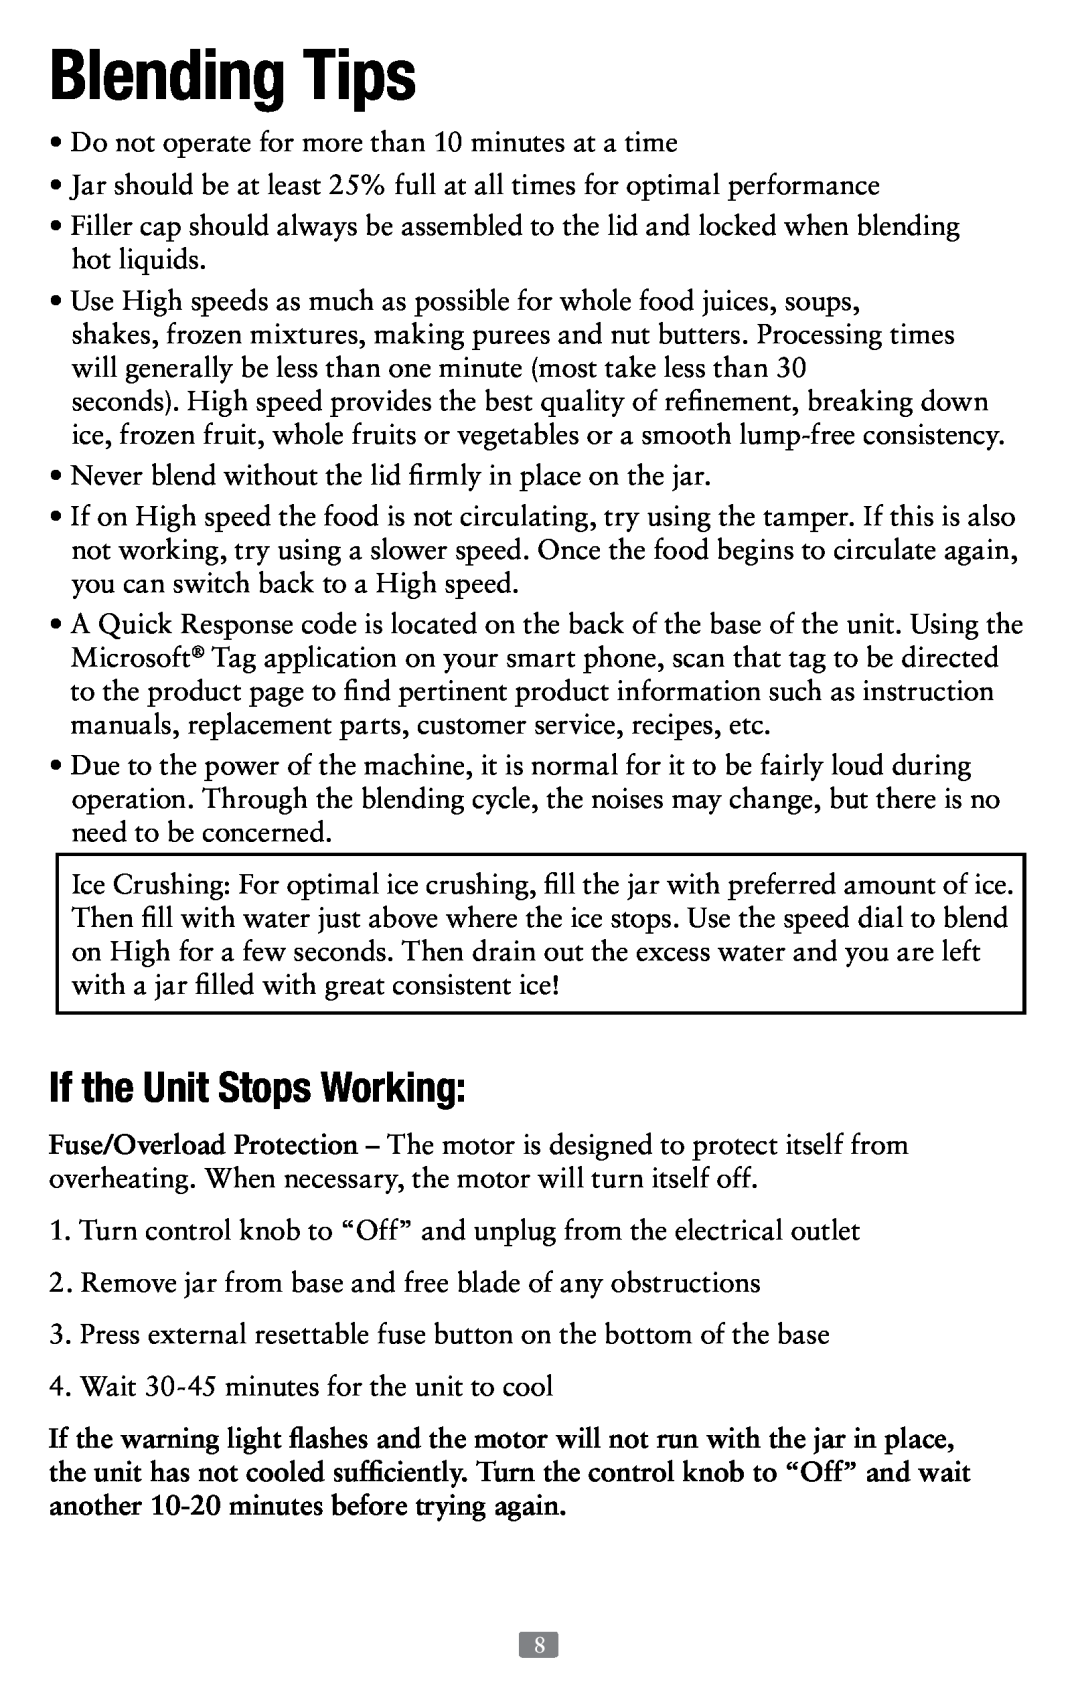 Oster 155876, Versa Performance Blender user manual If the Unit Stops Working, Blending Tips 